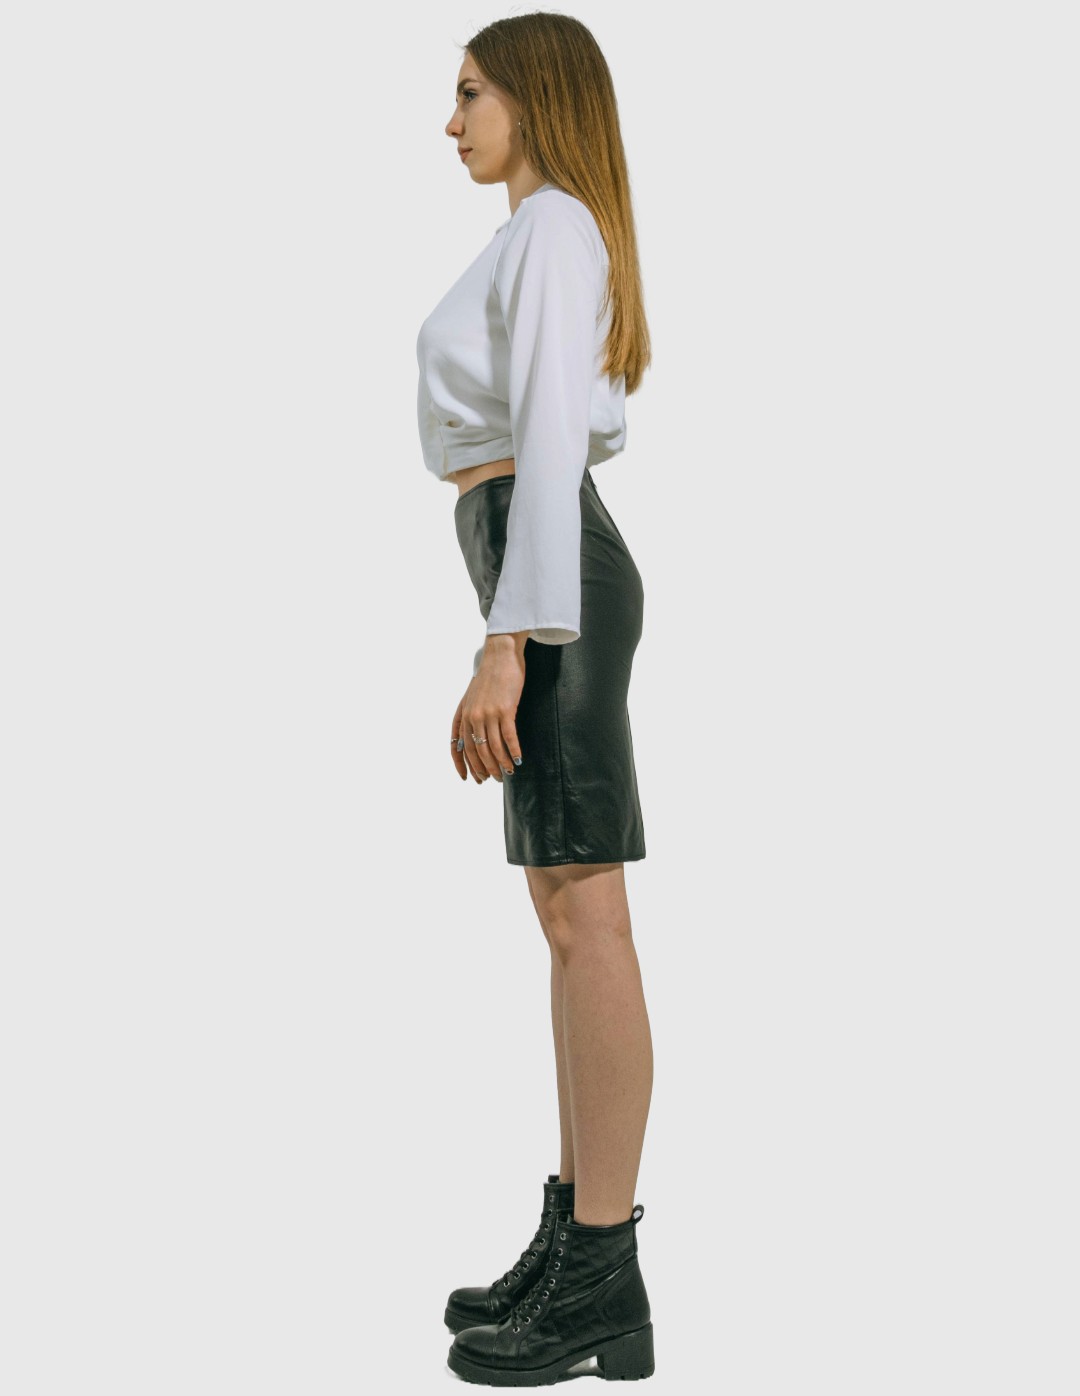 Premium Quality Genuine Leather Black Skirt Above Knee Midi Length Ann